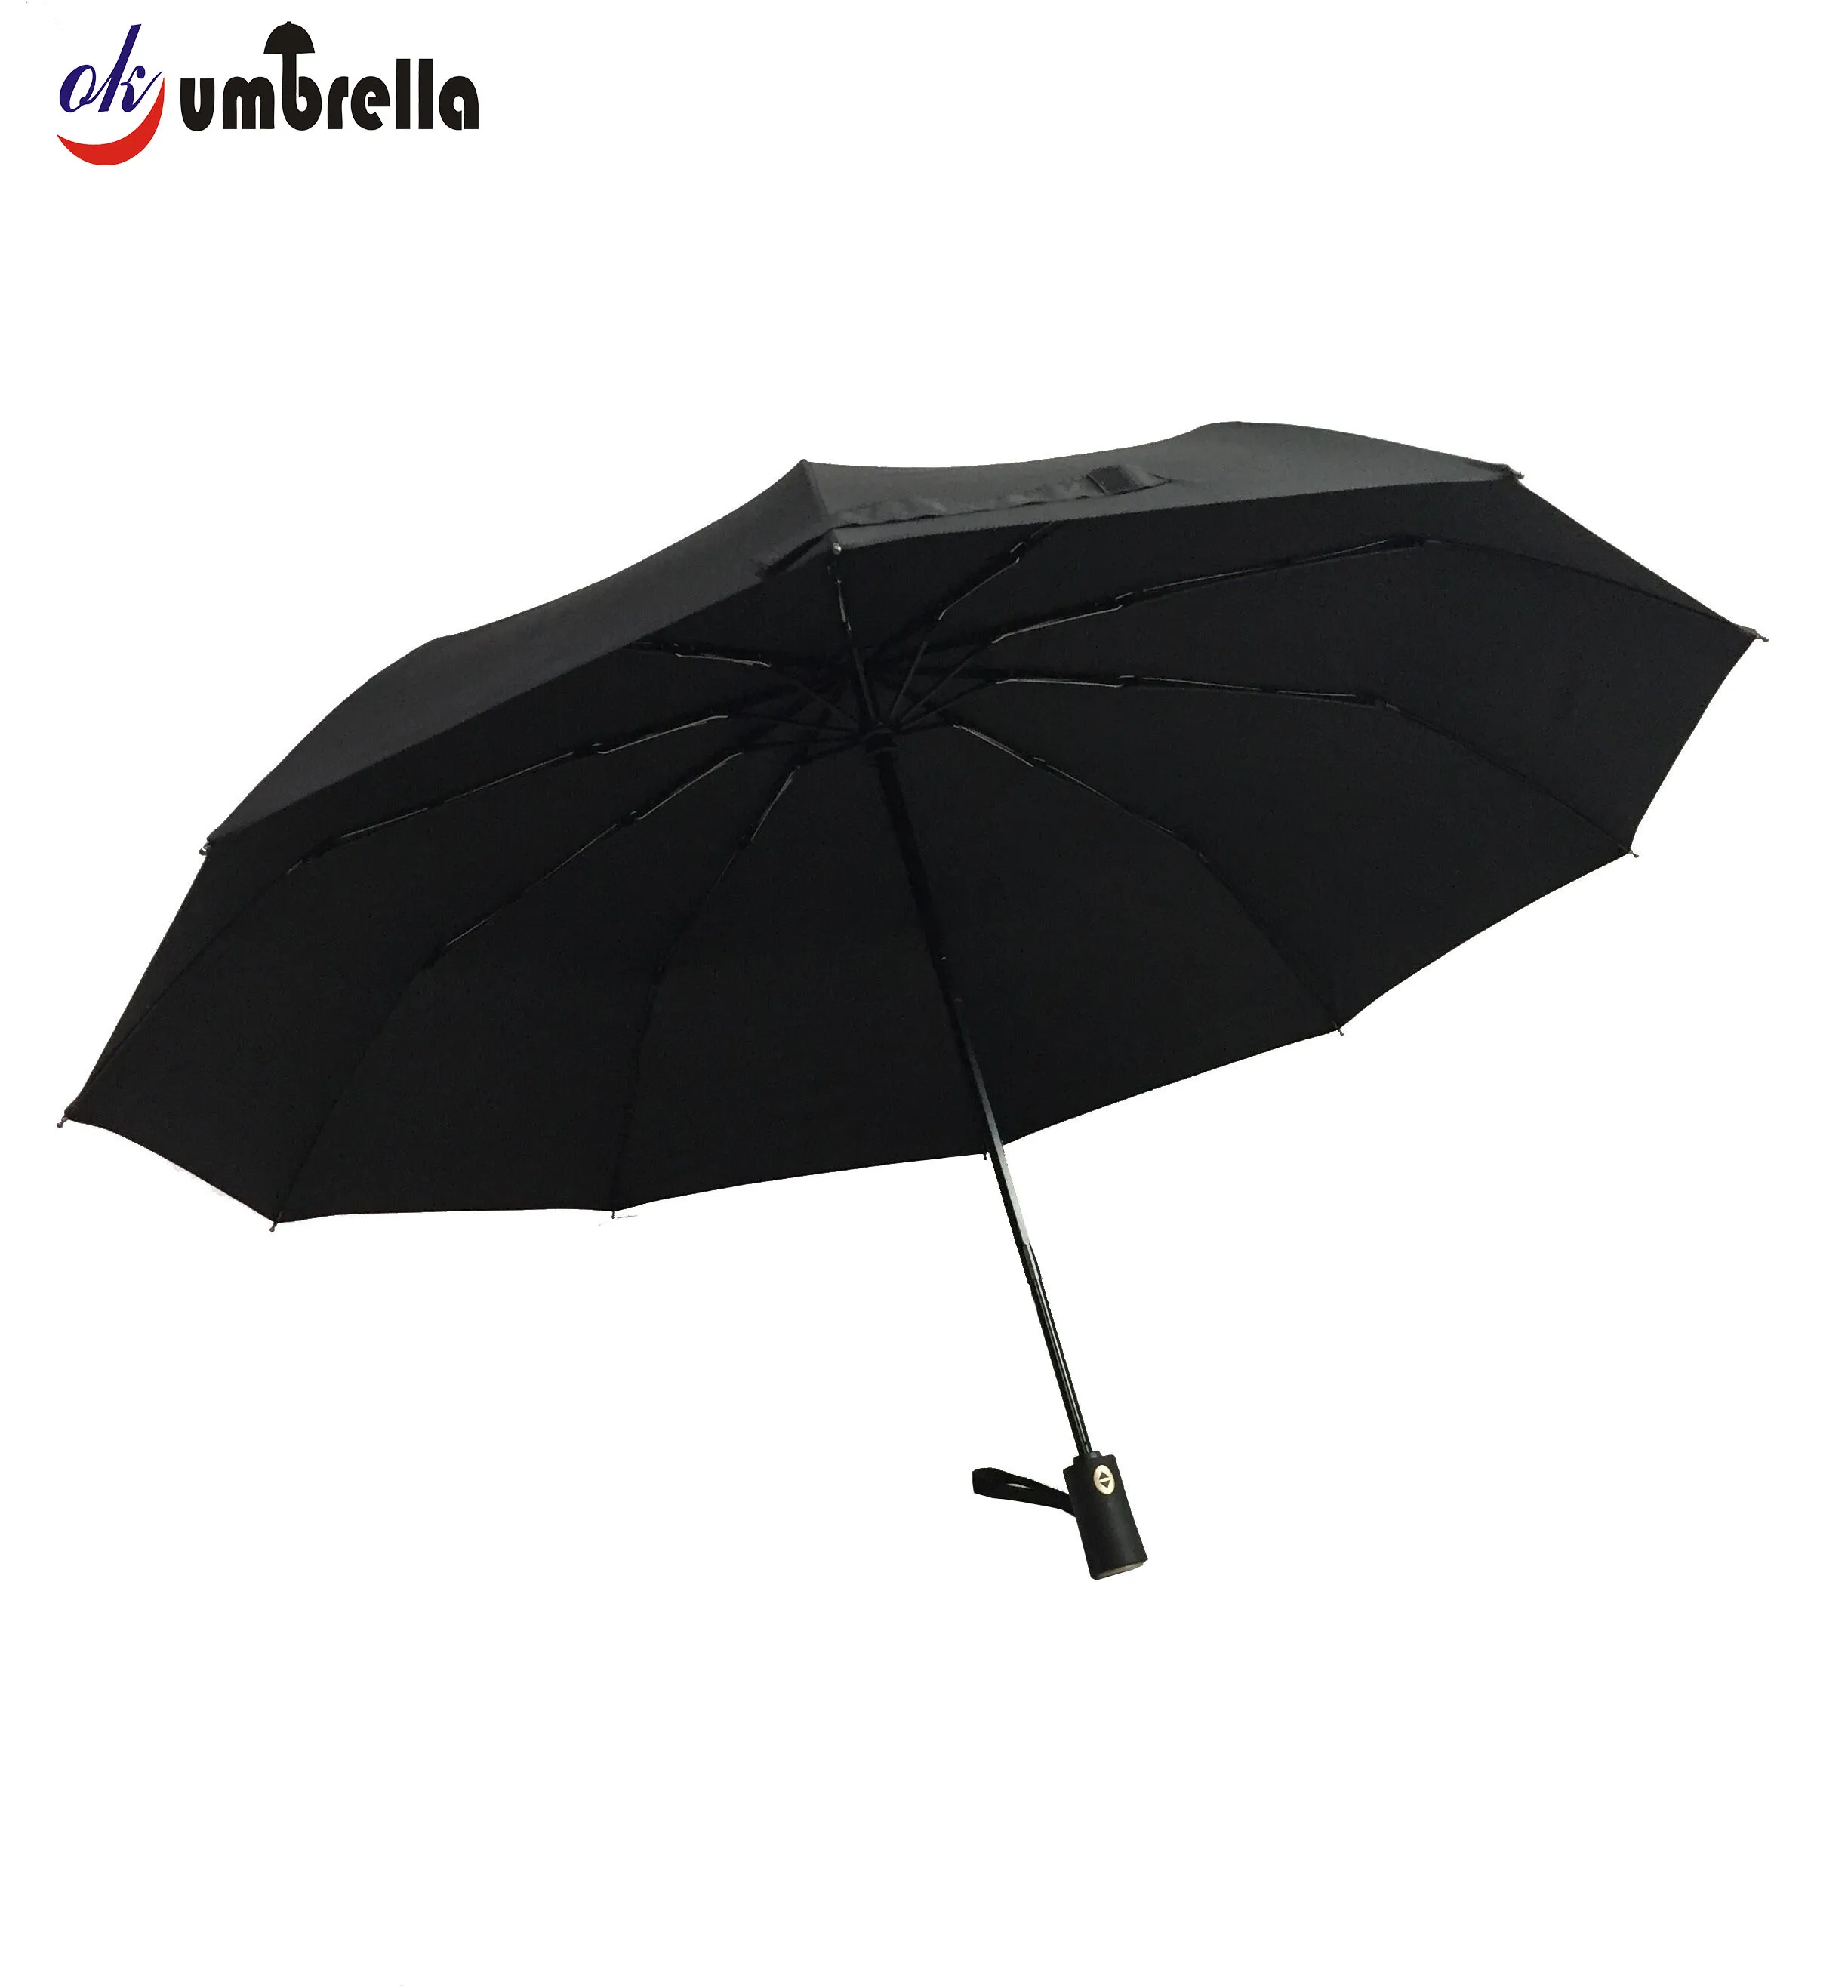 

okumbrella high quality auto open close 3 fold umbrella manufacturer china